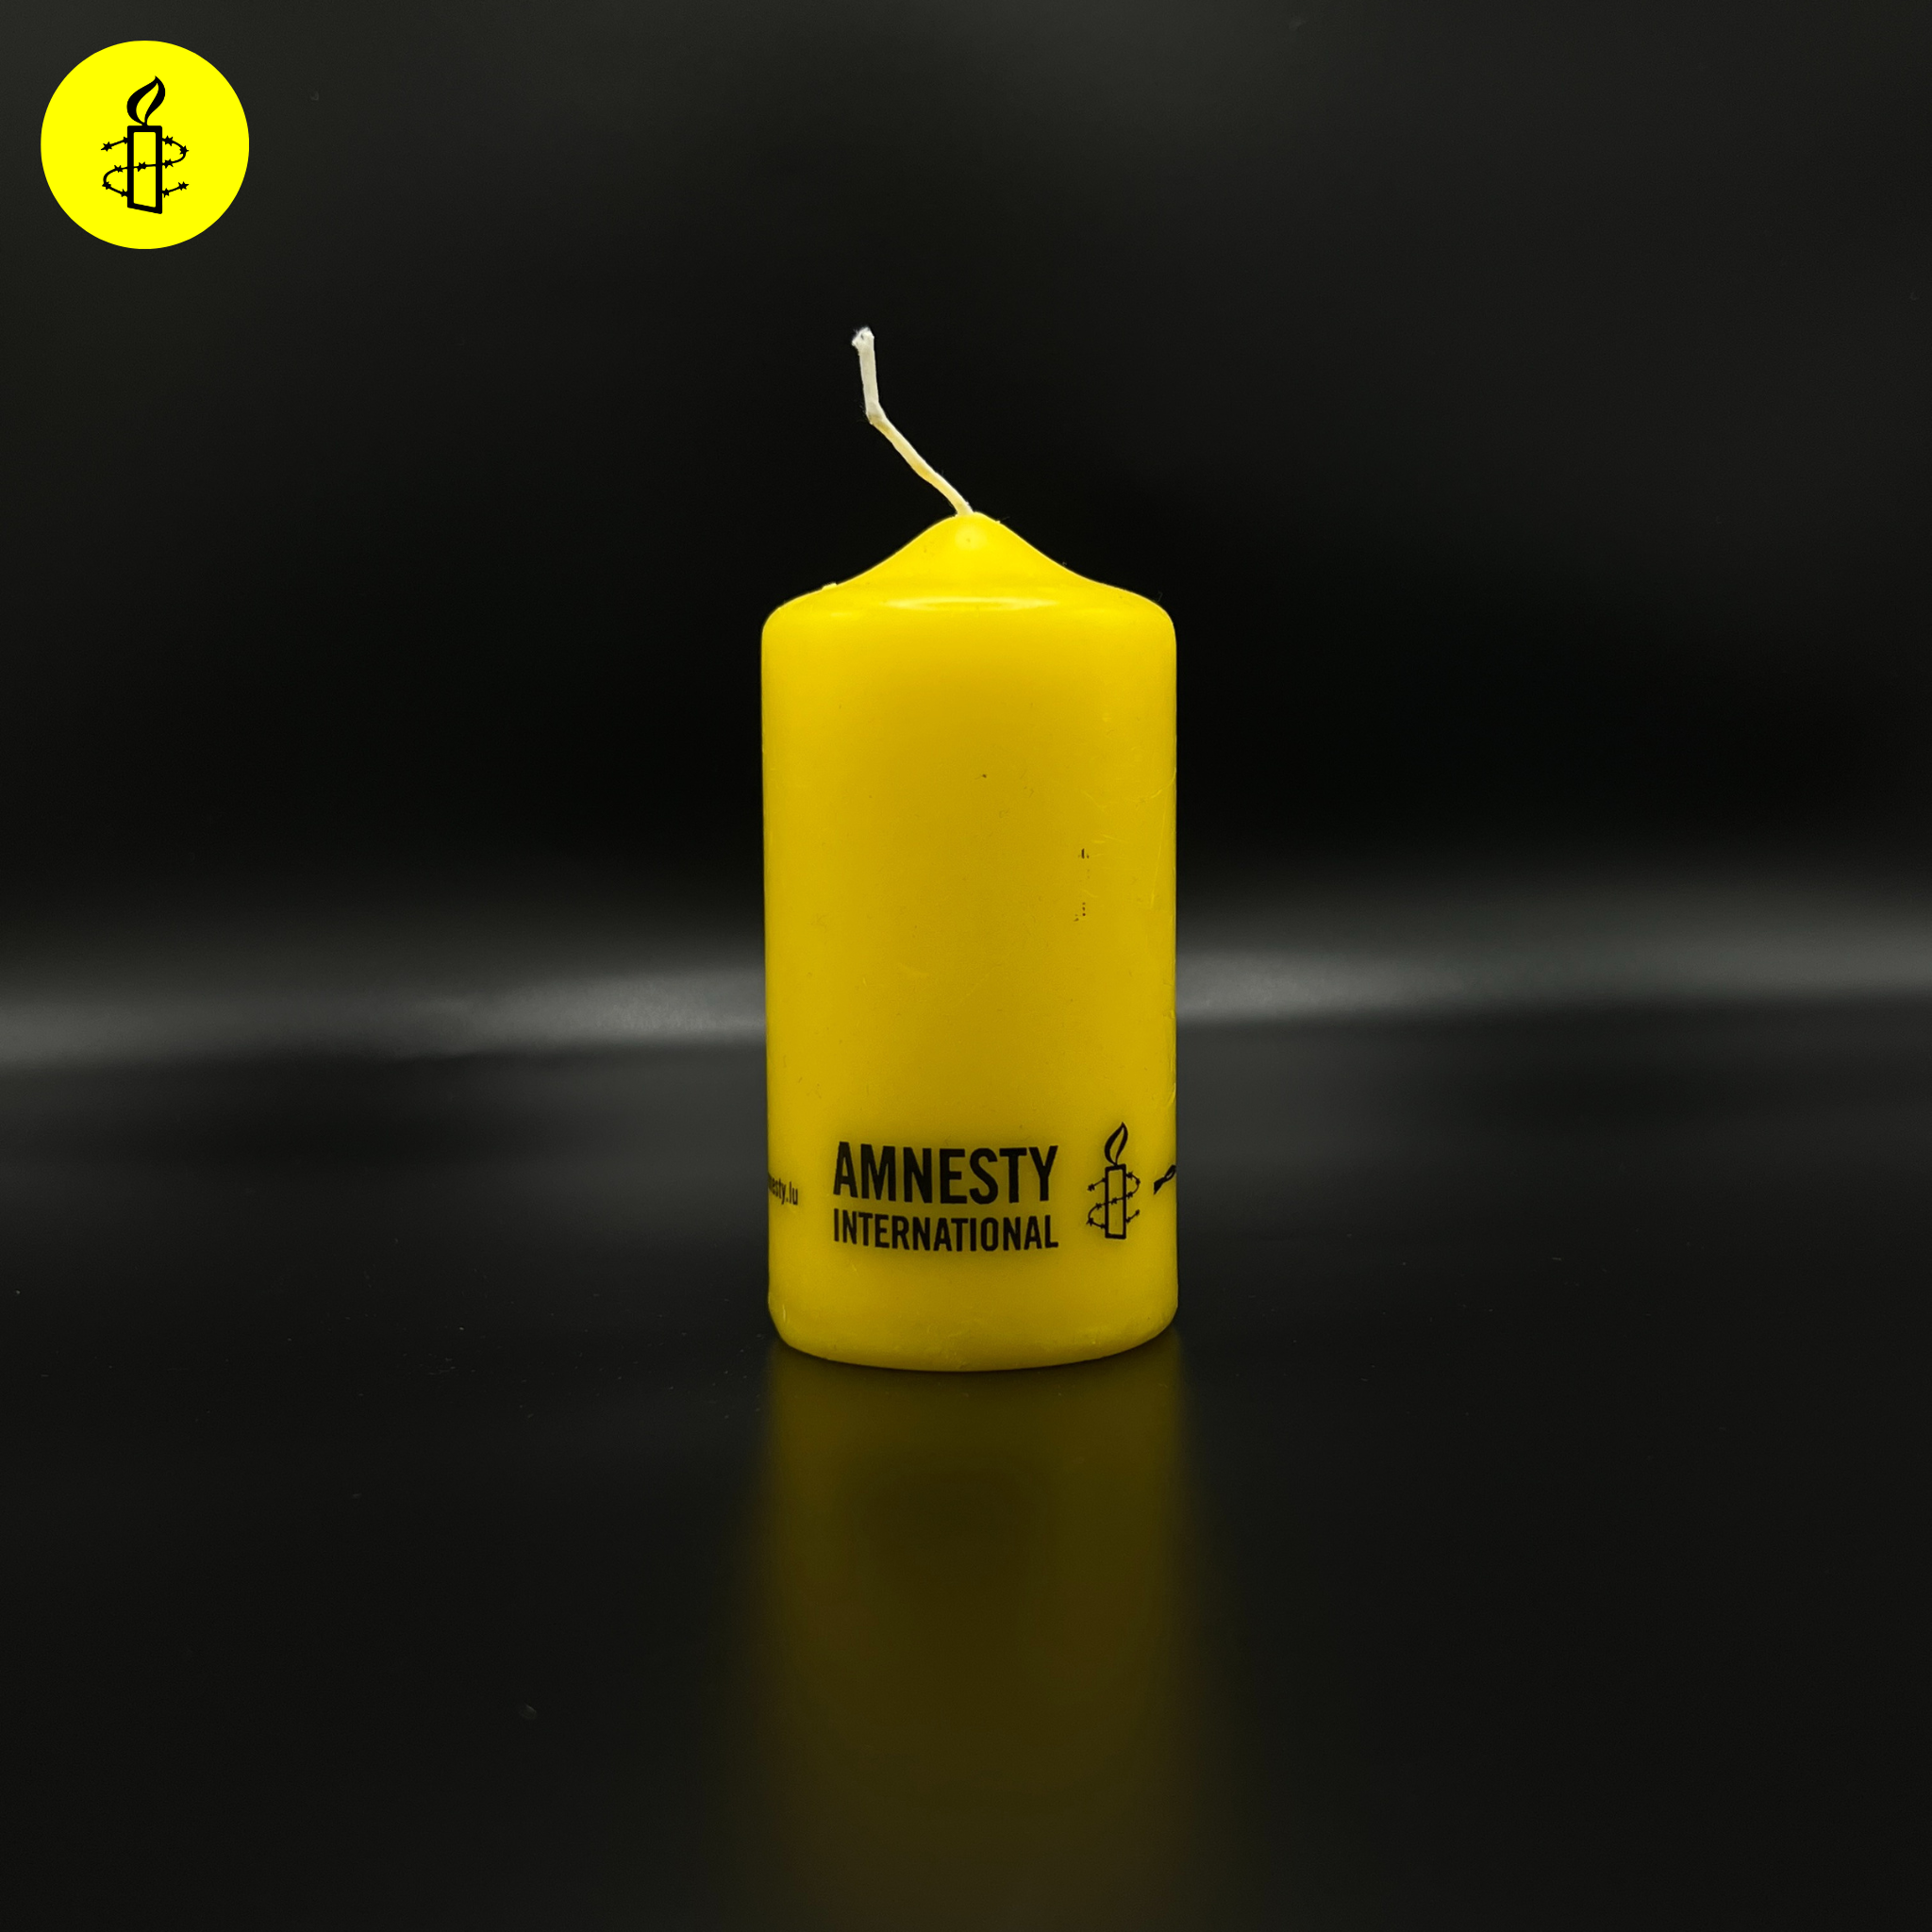 Grande bougie jaune  Amnesty International Luxembourg Amnesty International